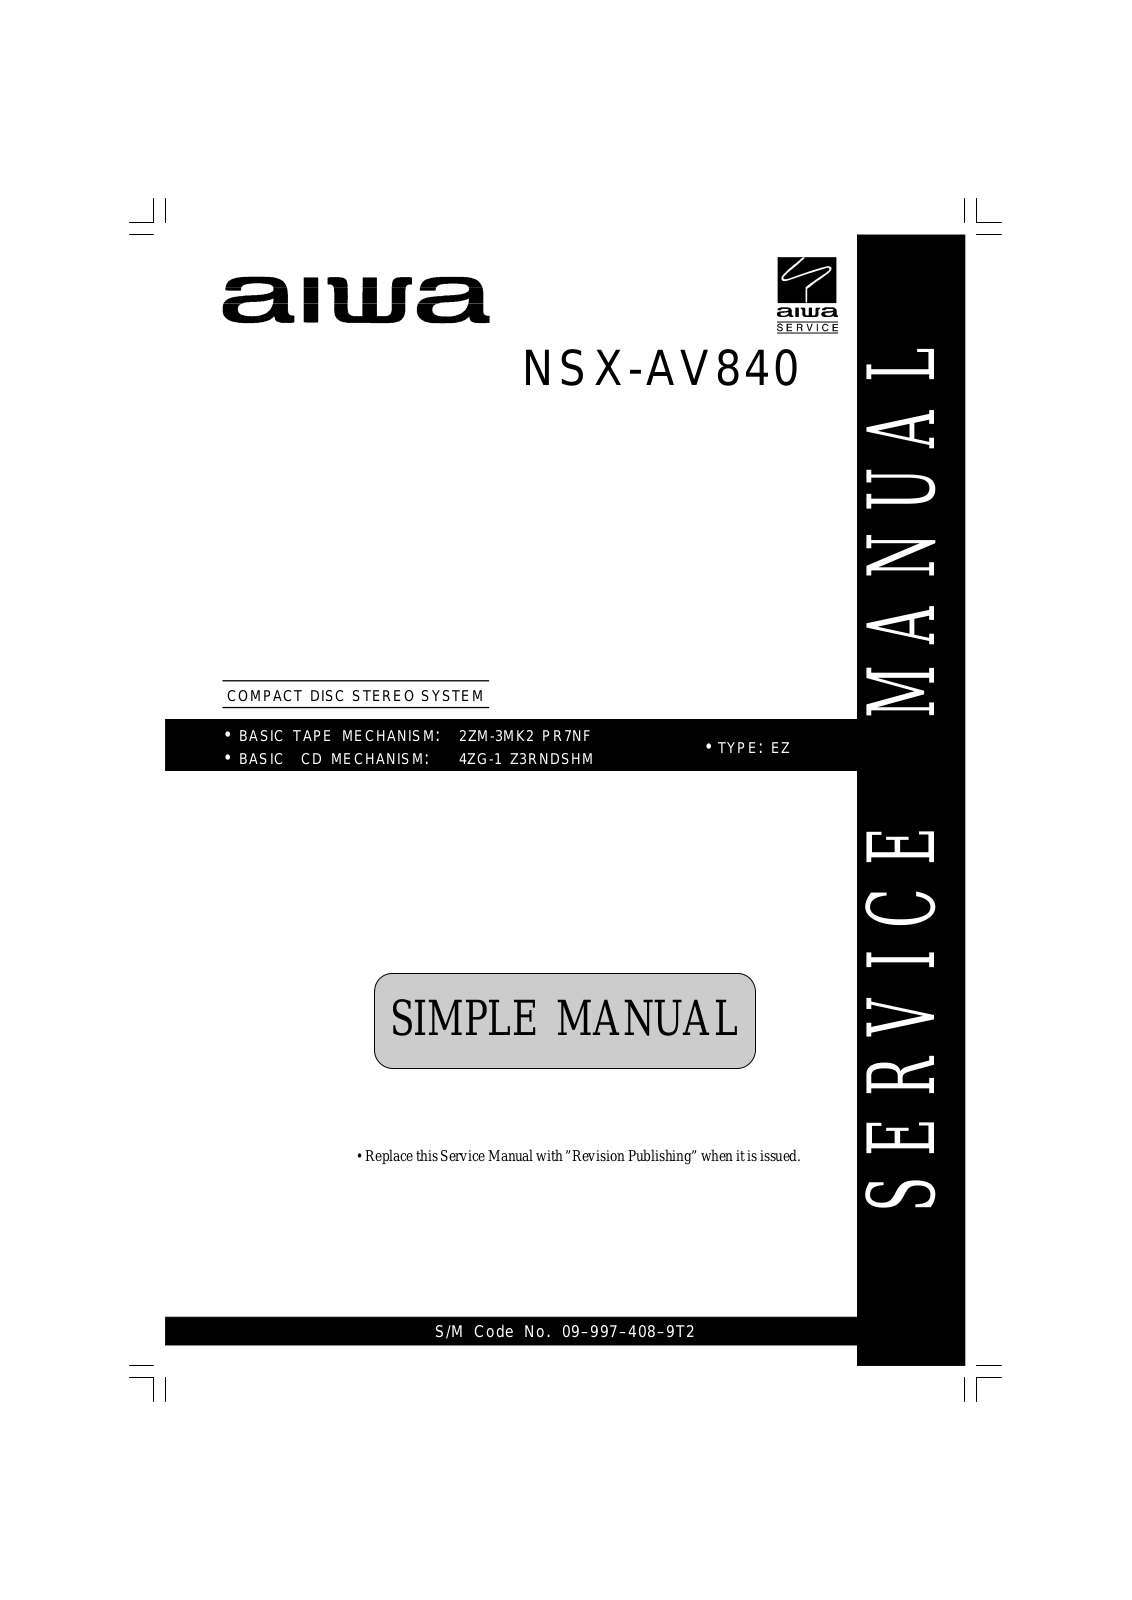 Aiwa NSXAV-840 Service manual